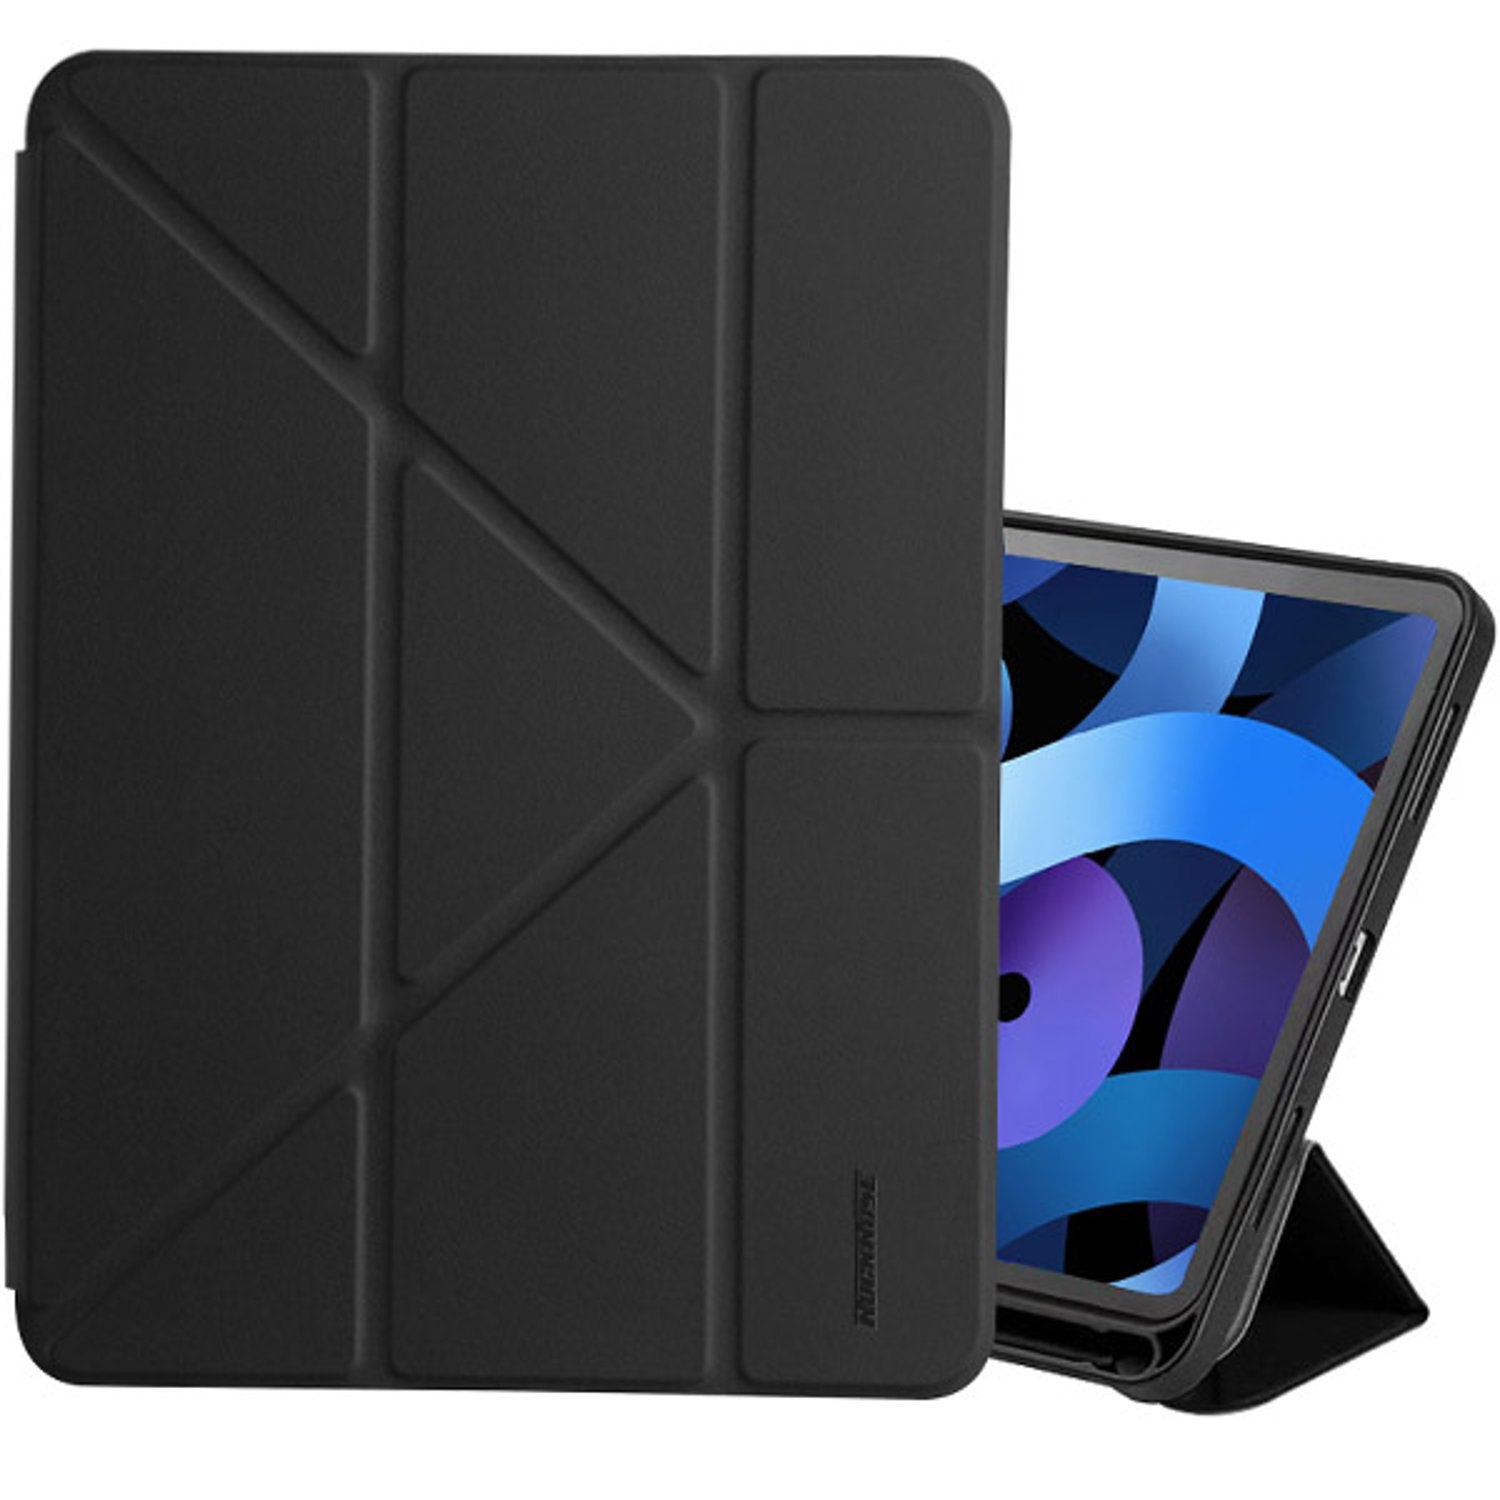 RockRose Defensor II Smart Tri-Fold Folio For iPad 8 & 9 10.2 inch 2019, Black